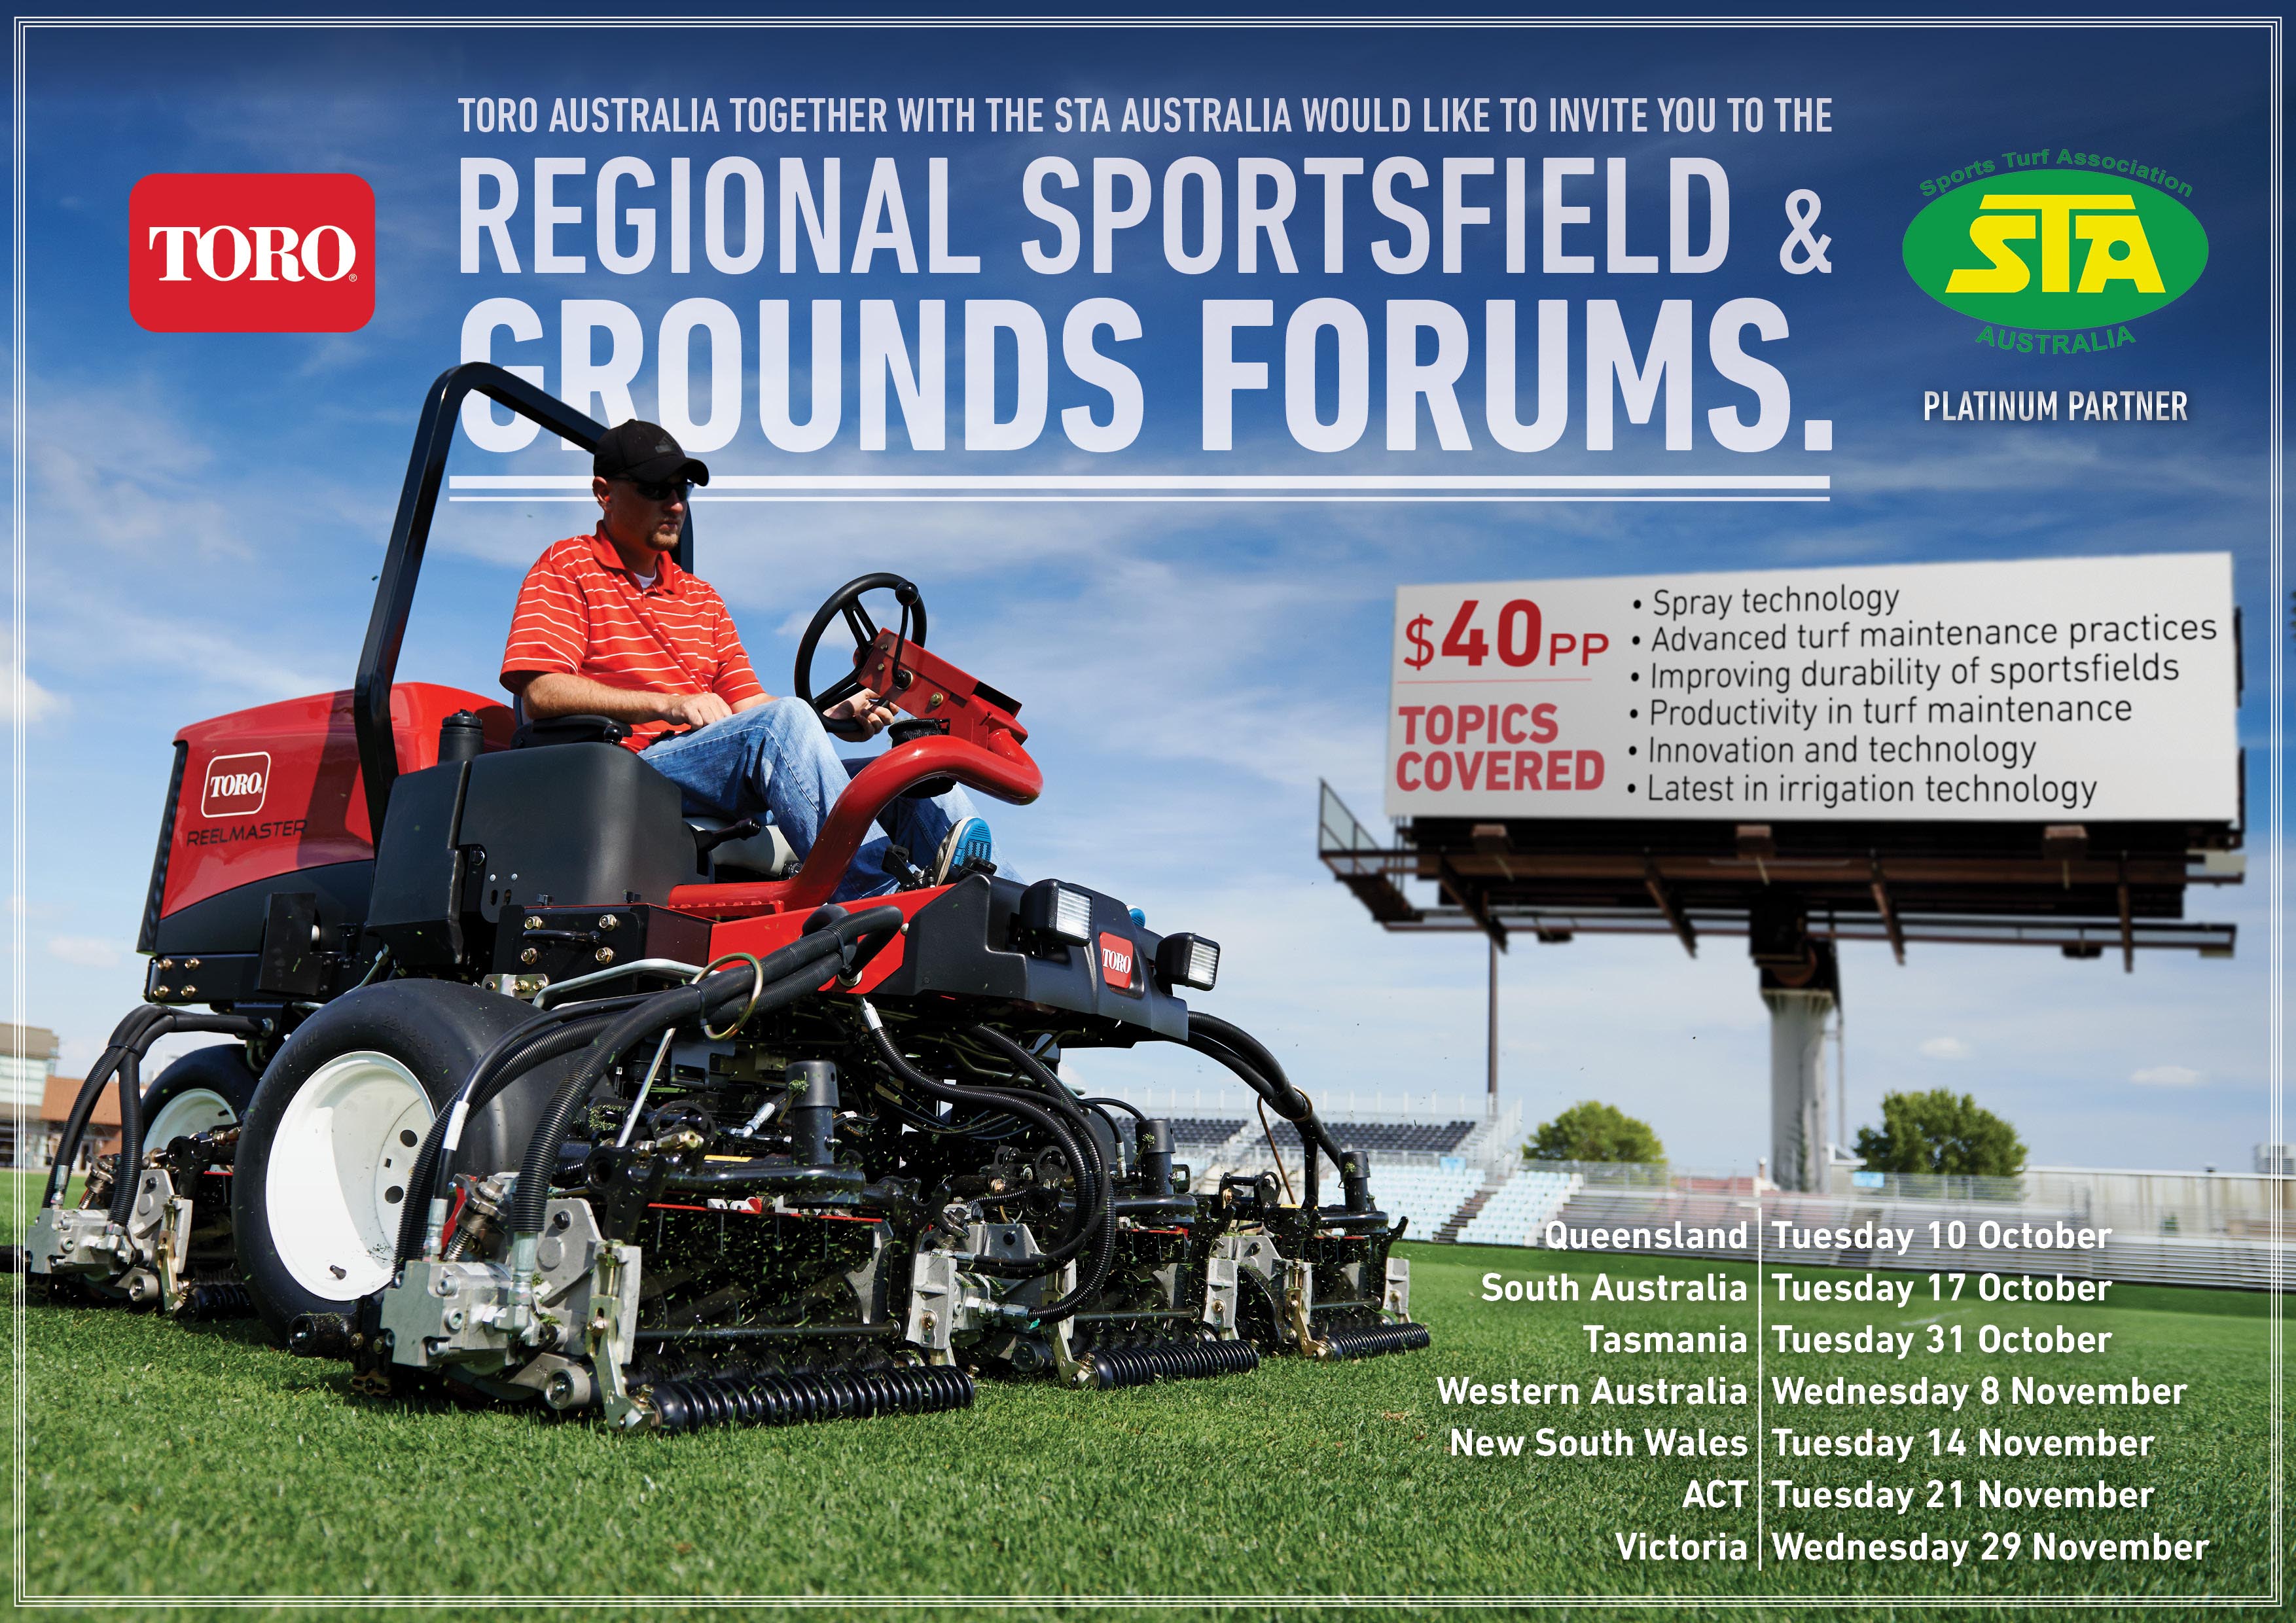 Regional Sportsfield & Grounds Forums to be held around Australia